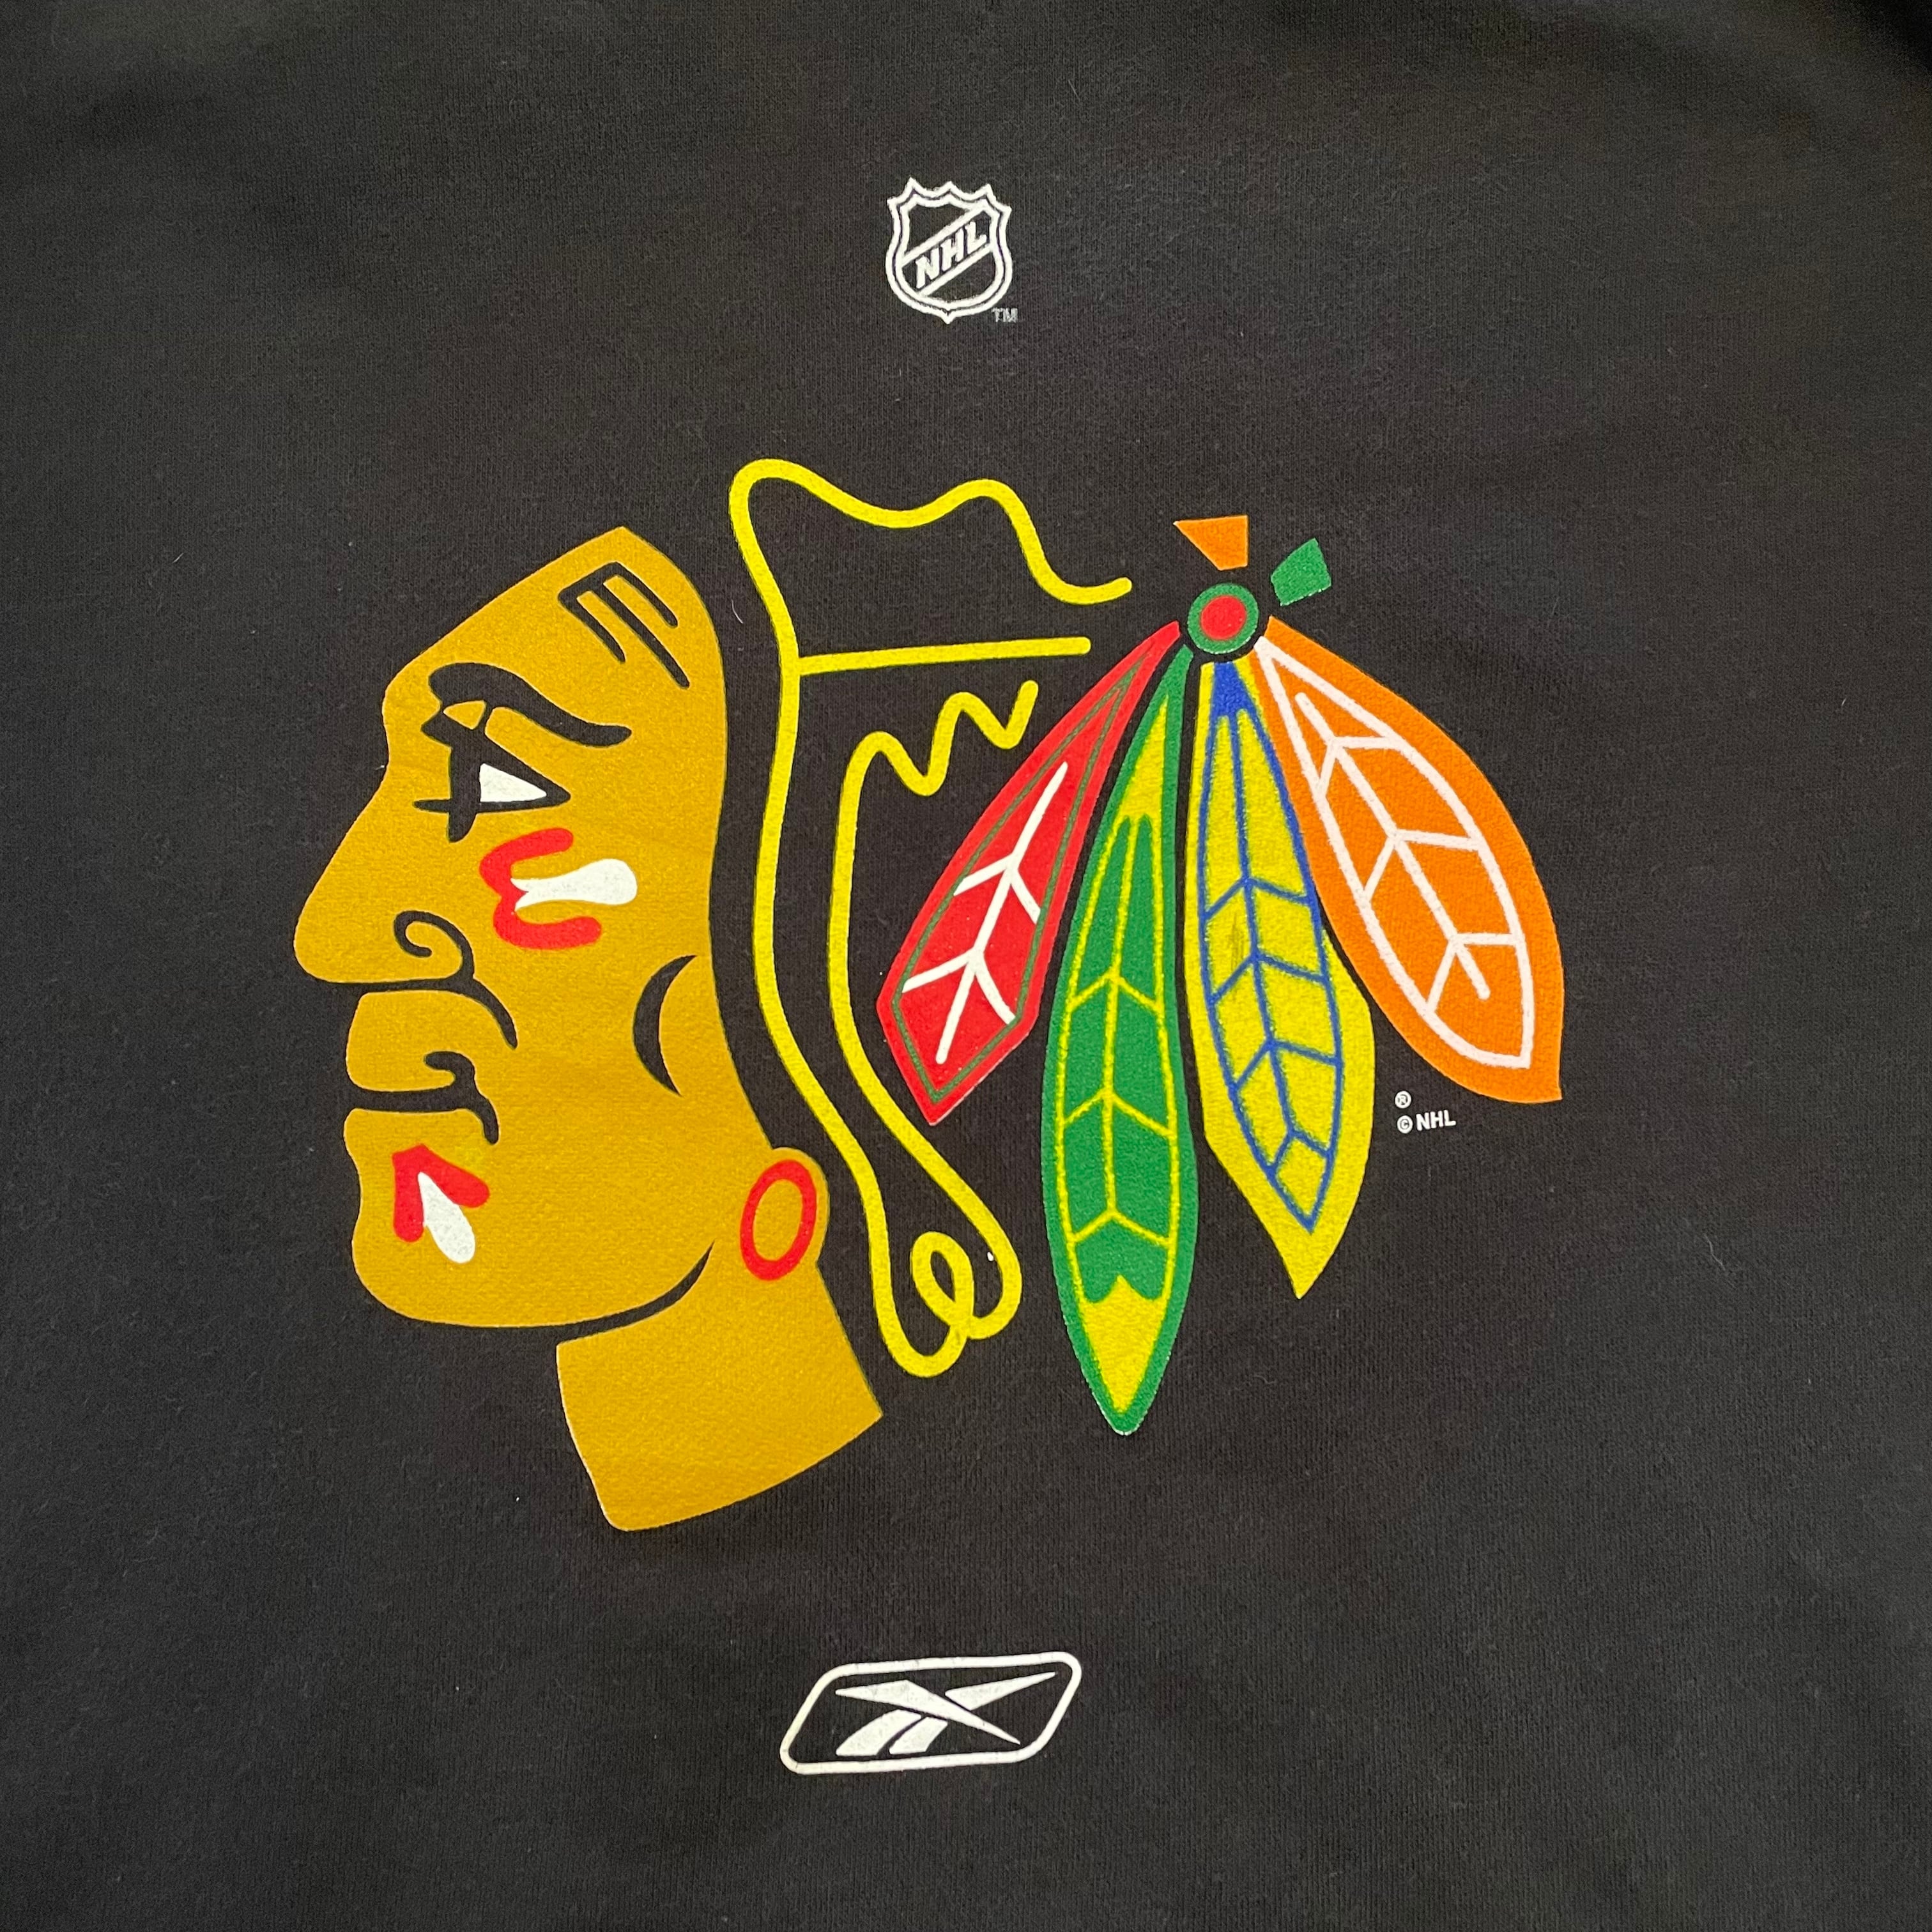 NHL 半袖Tシャツ シカゴブラックホークス L ロゴ 黒